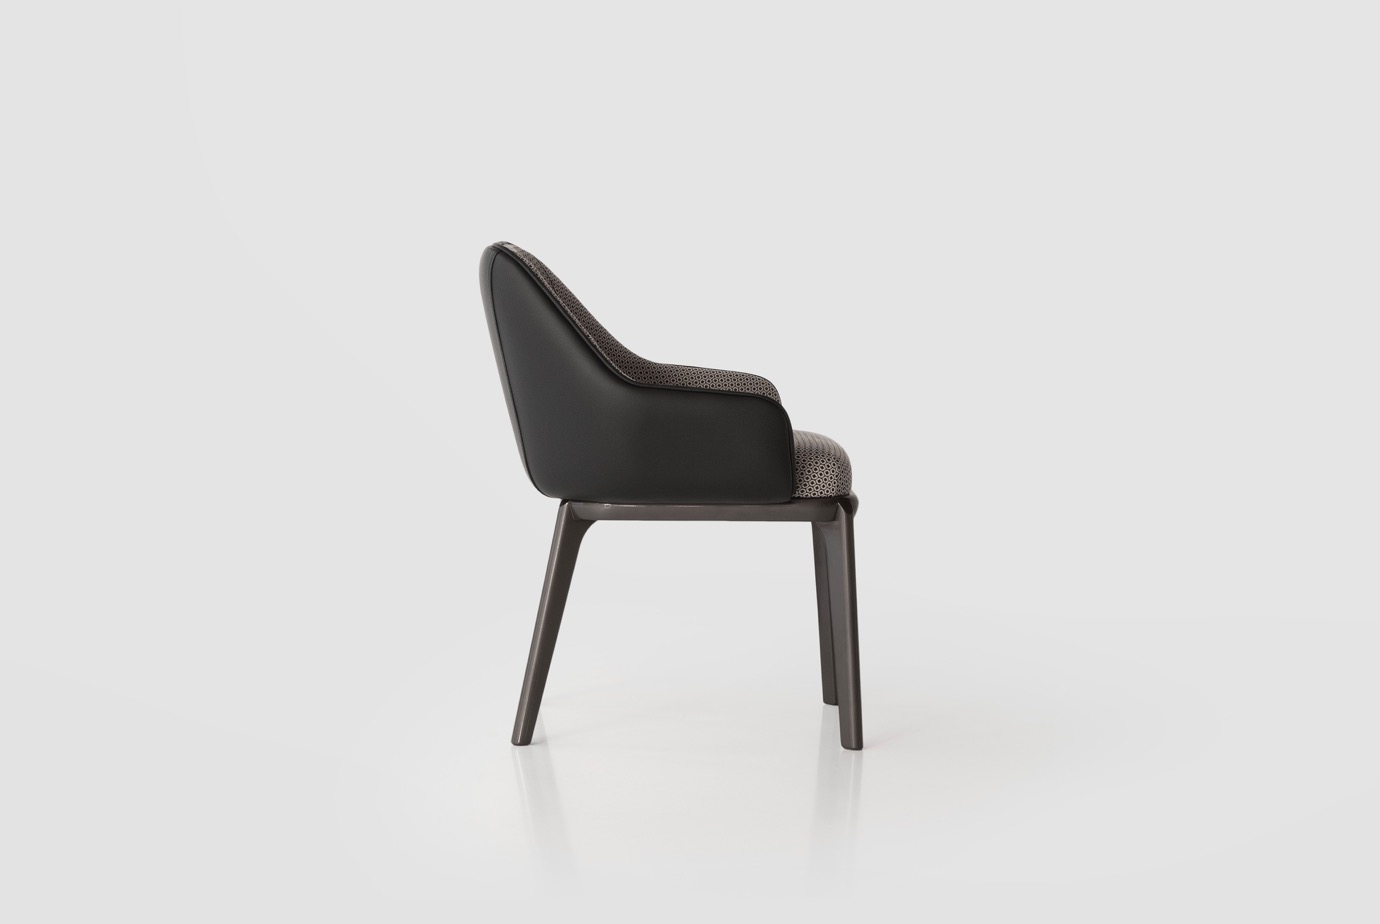 Overlap - Chair / Carlos Soriano